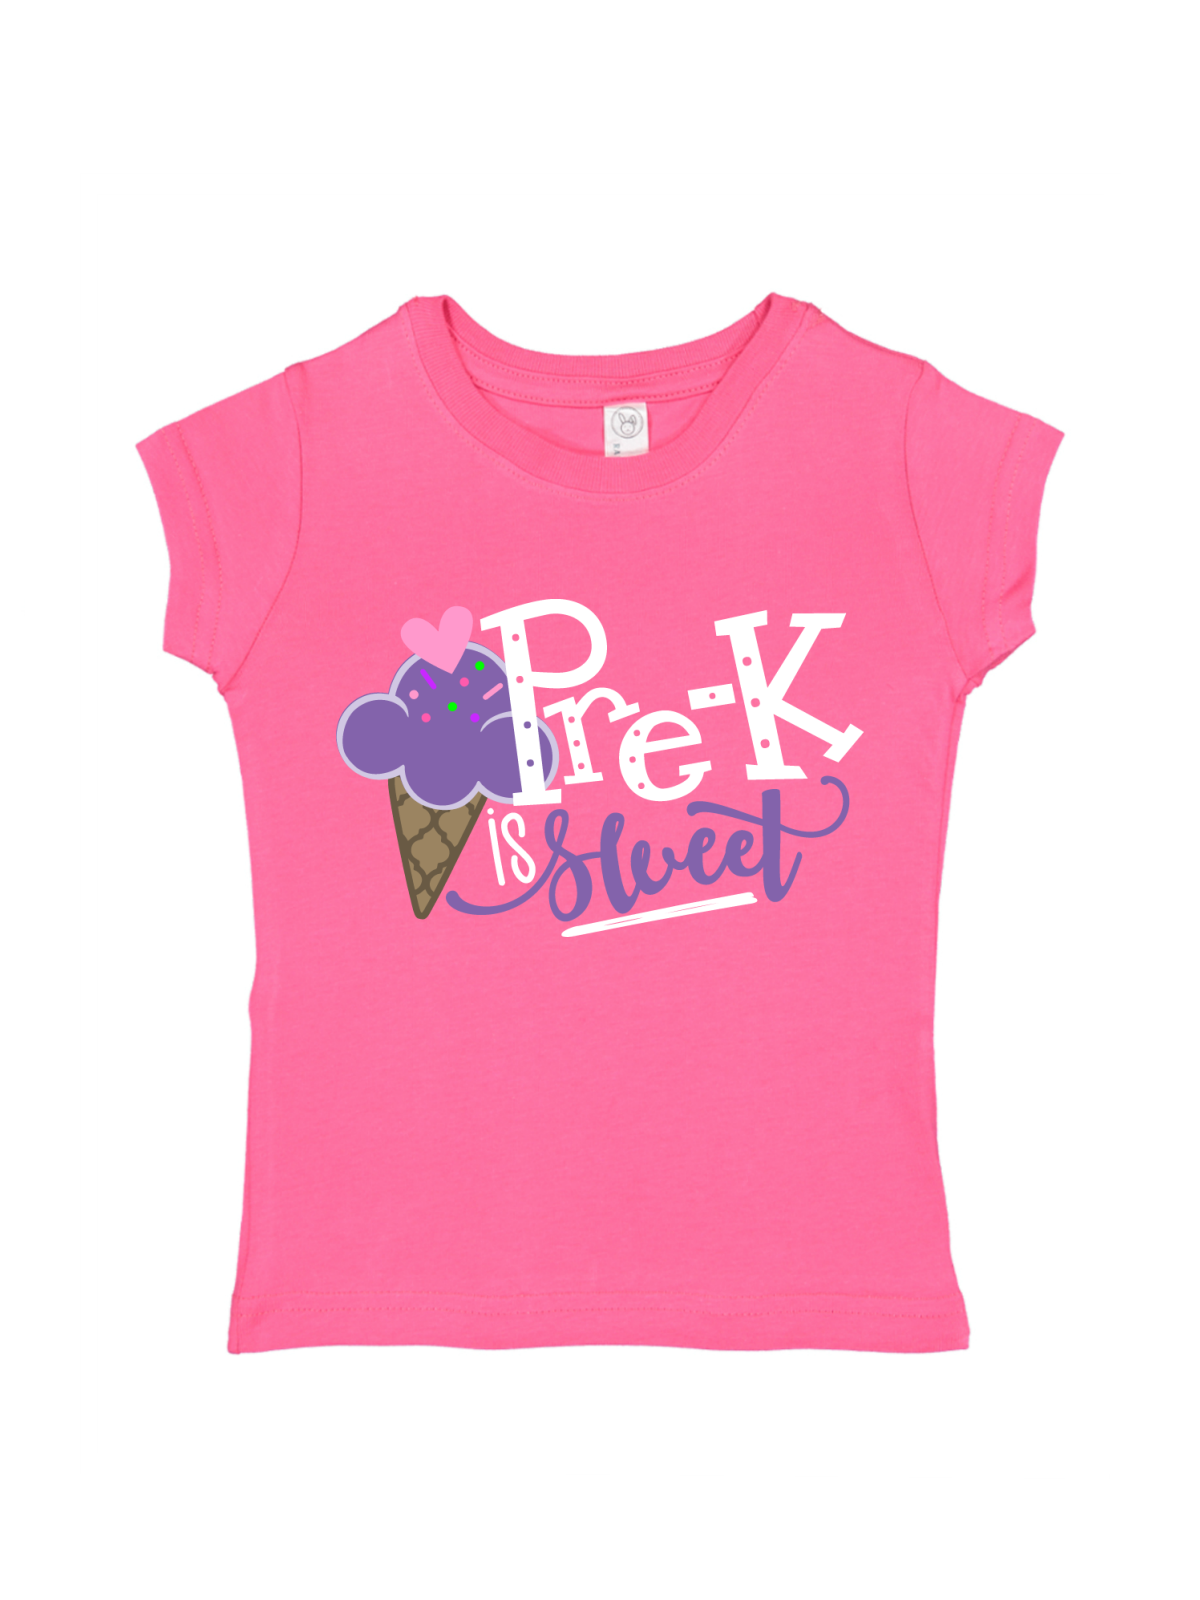 Pre K is Sweet Girls Raspberry Pink Shirt